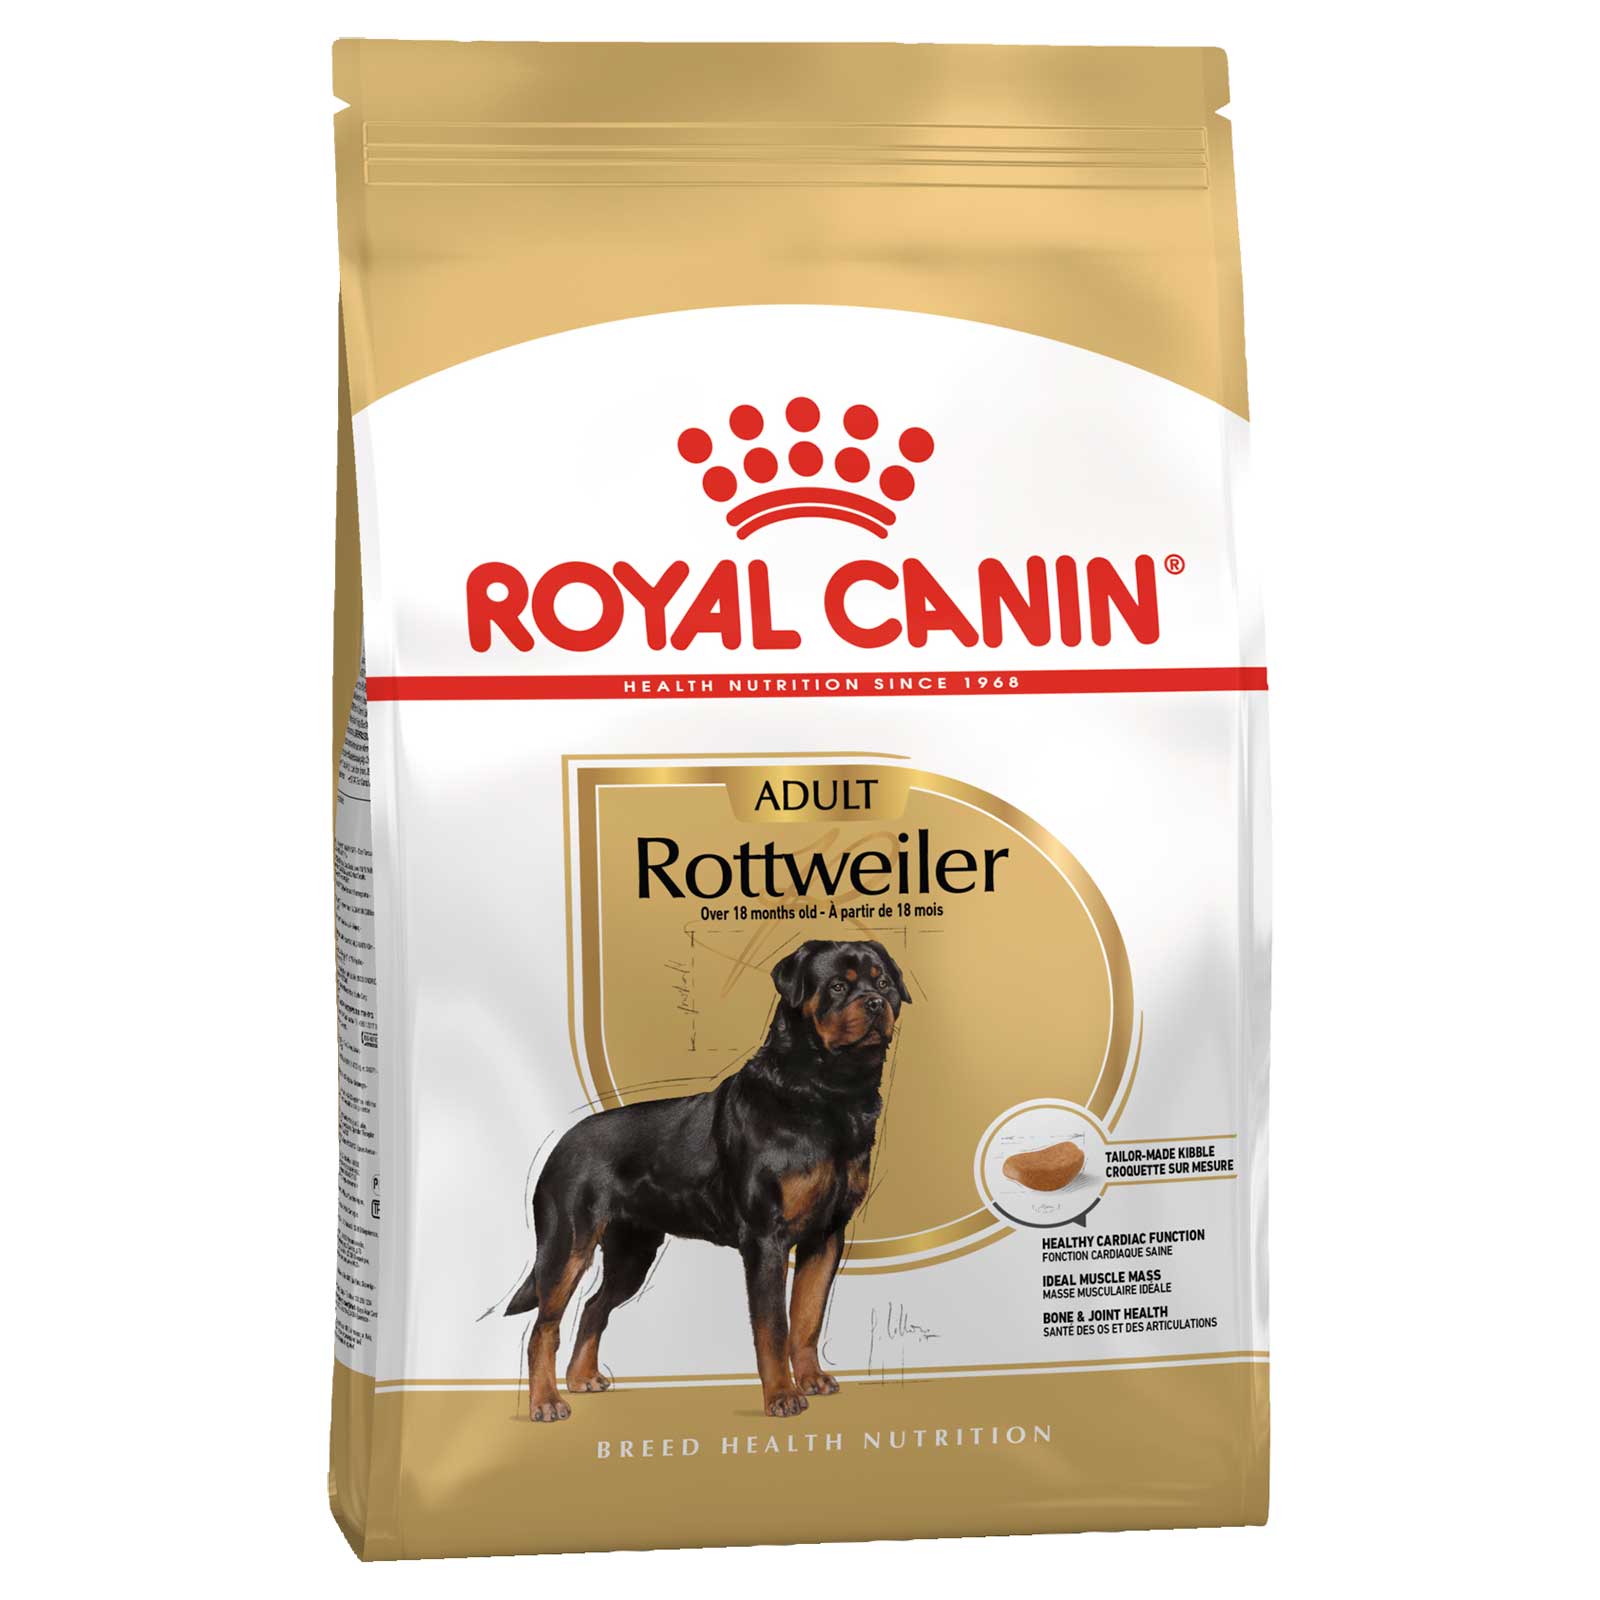 Royal Canin Dog Food Adult Rottweiler